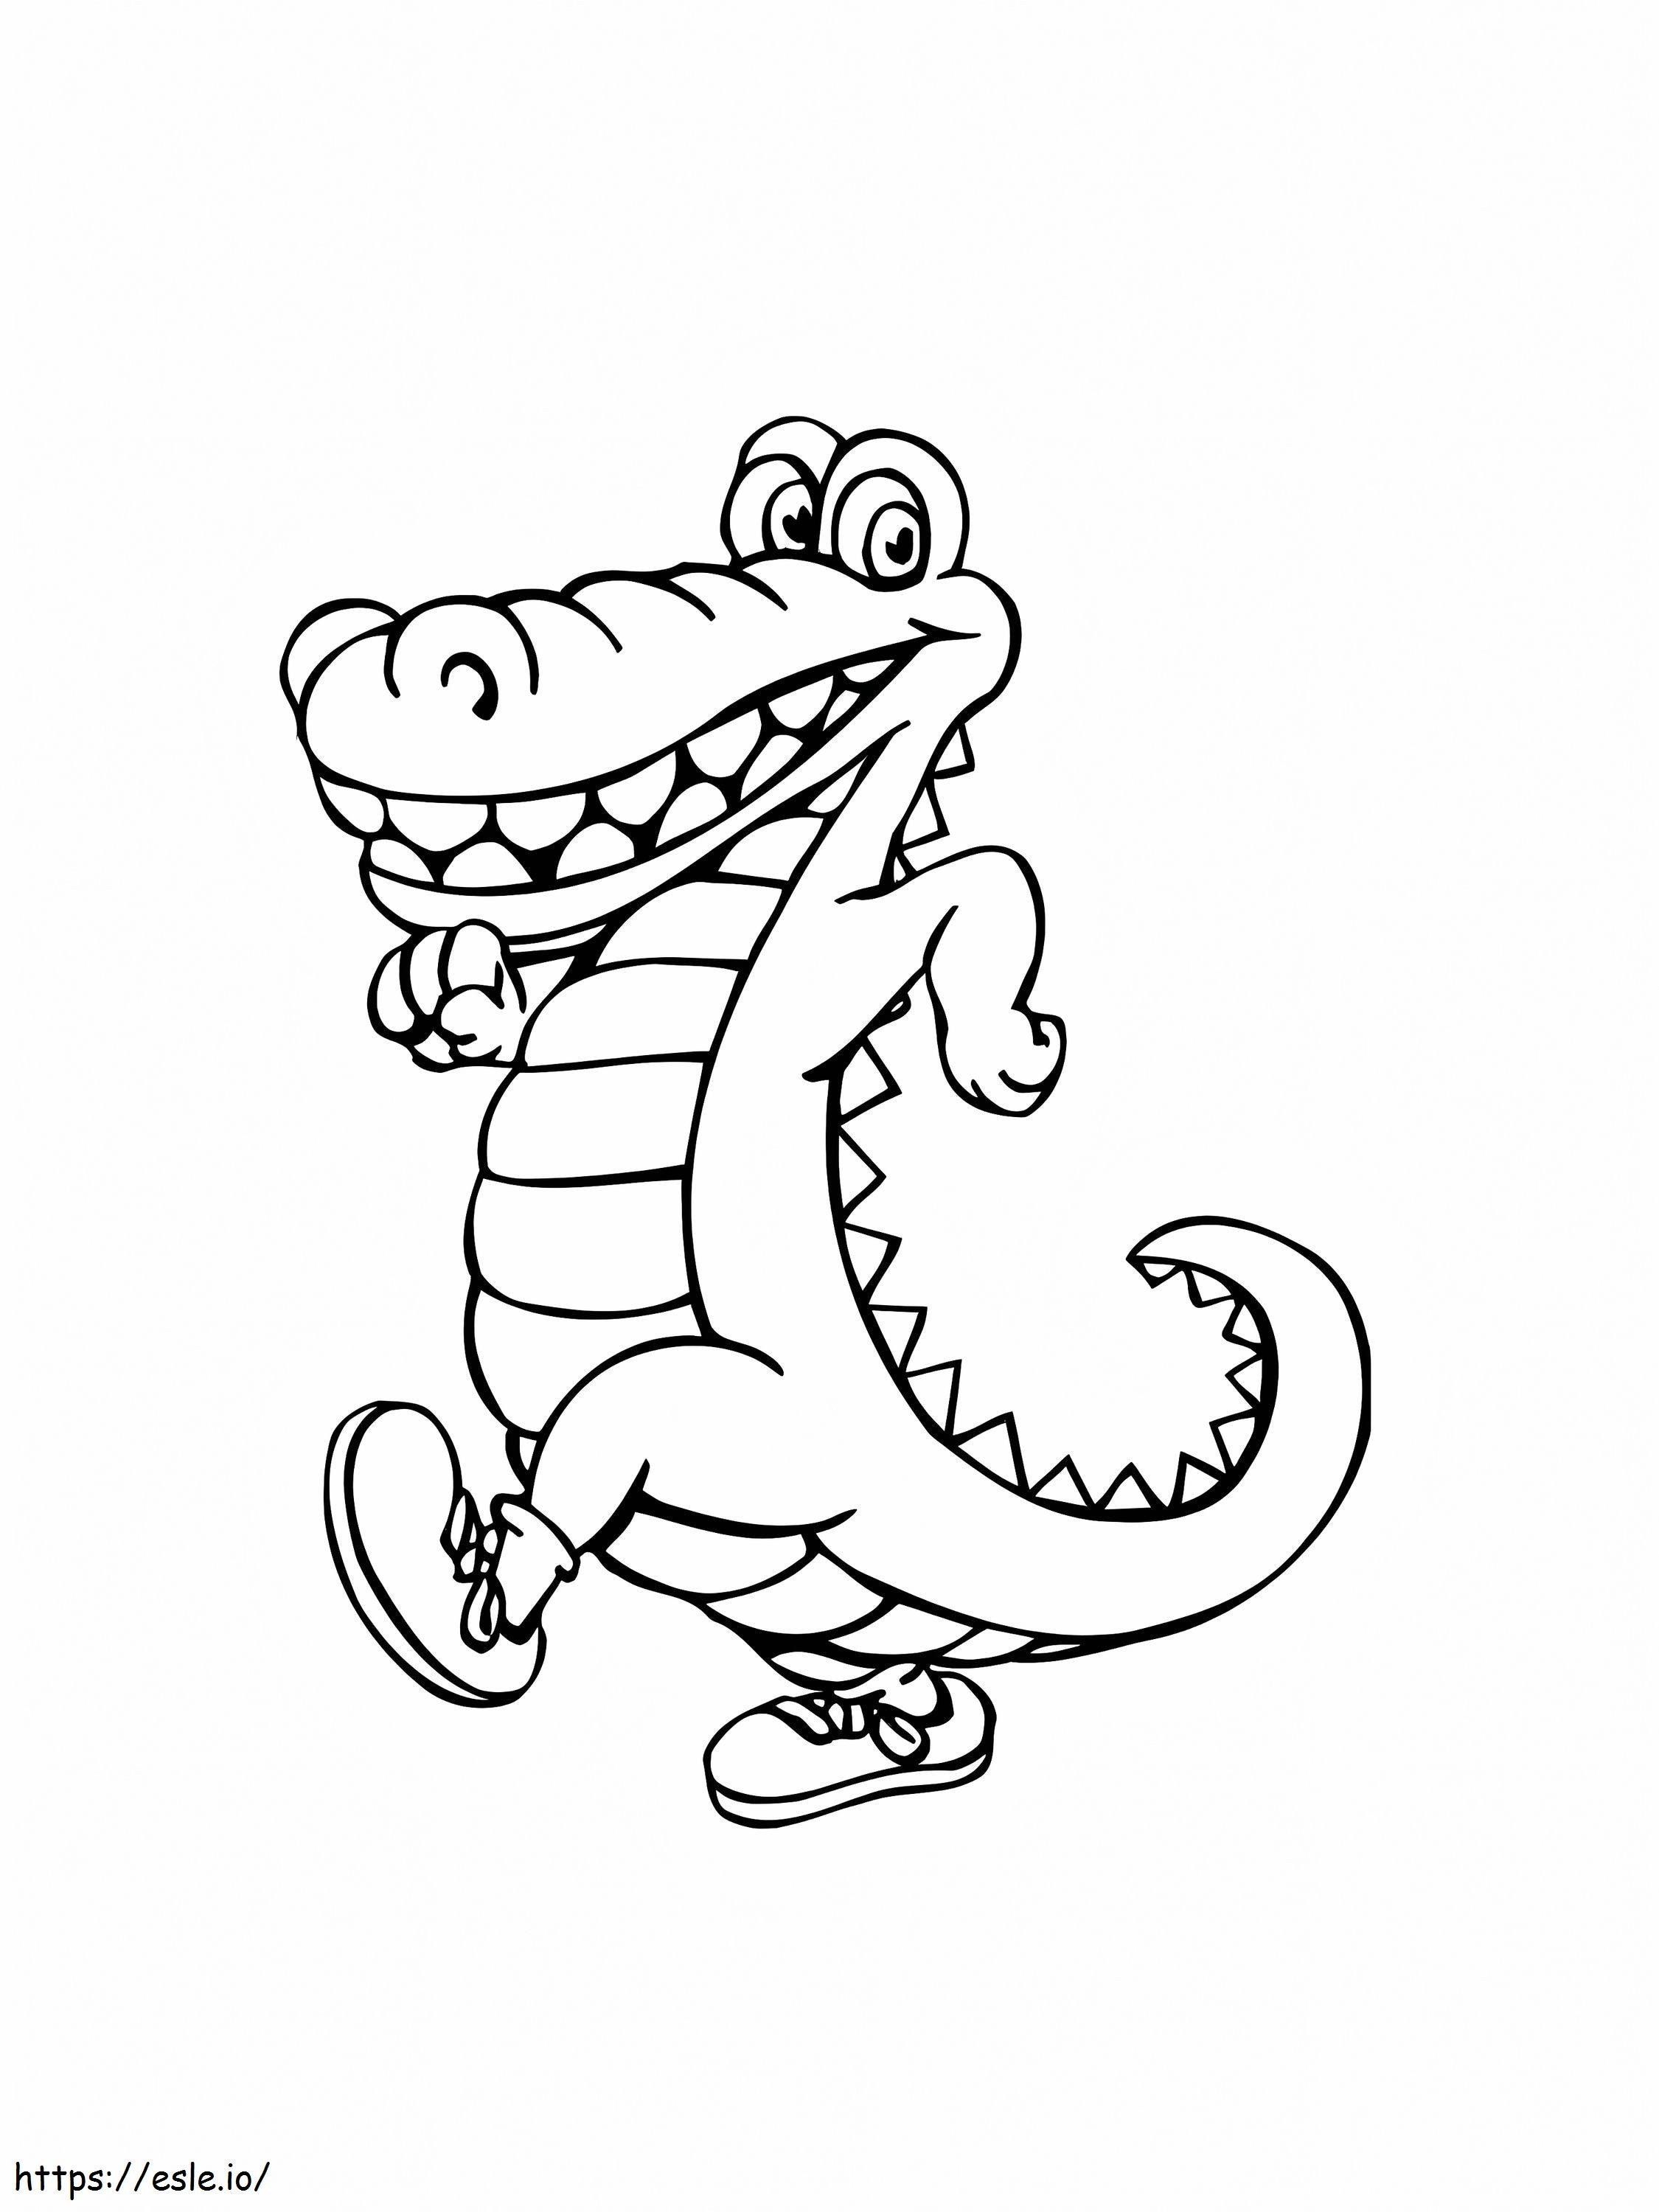 Funny Crocodile Walking coloring page